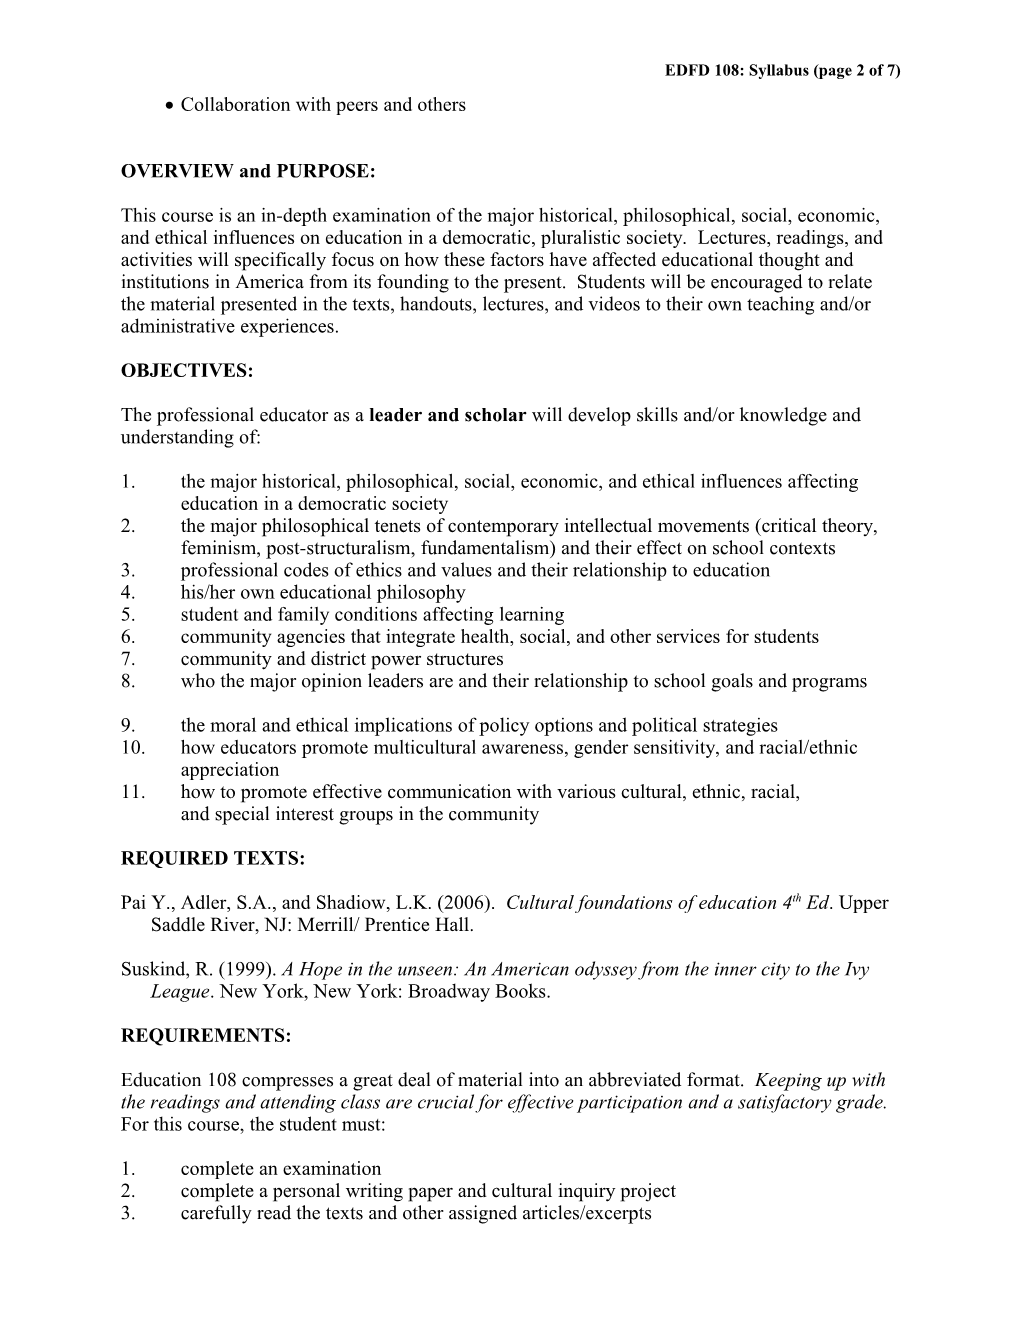 EDFD 108: Syllabus (Page 1 of 7)